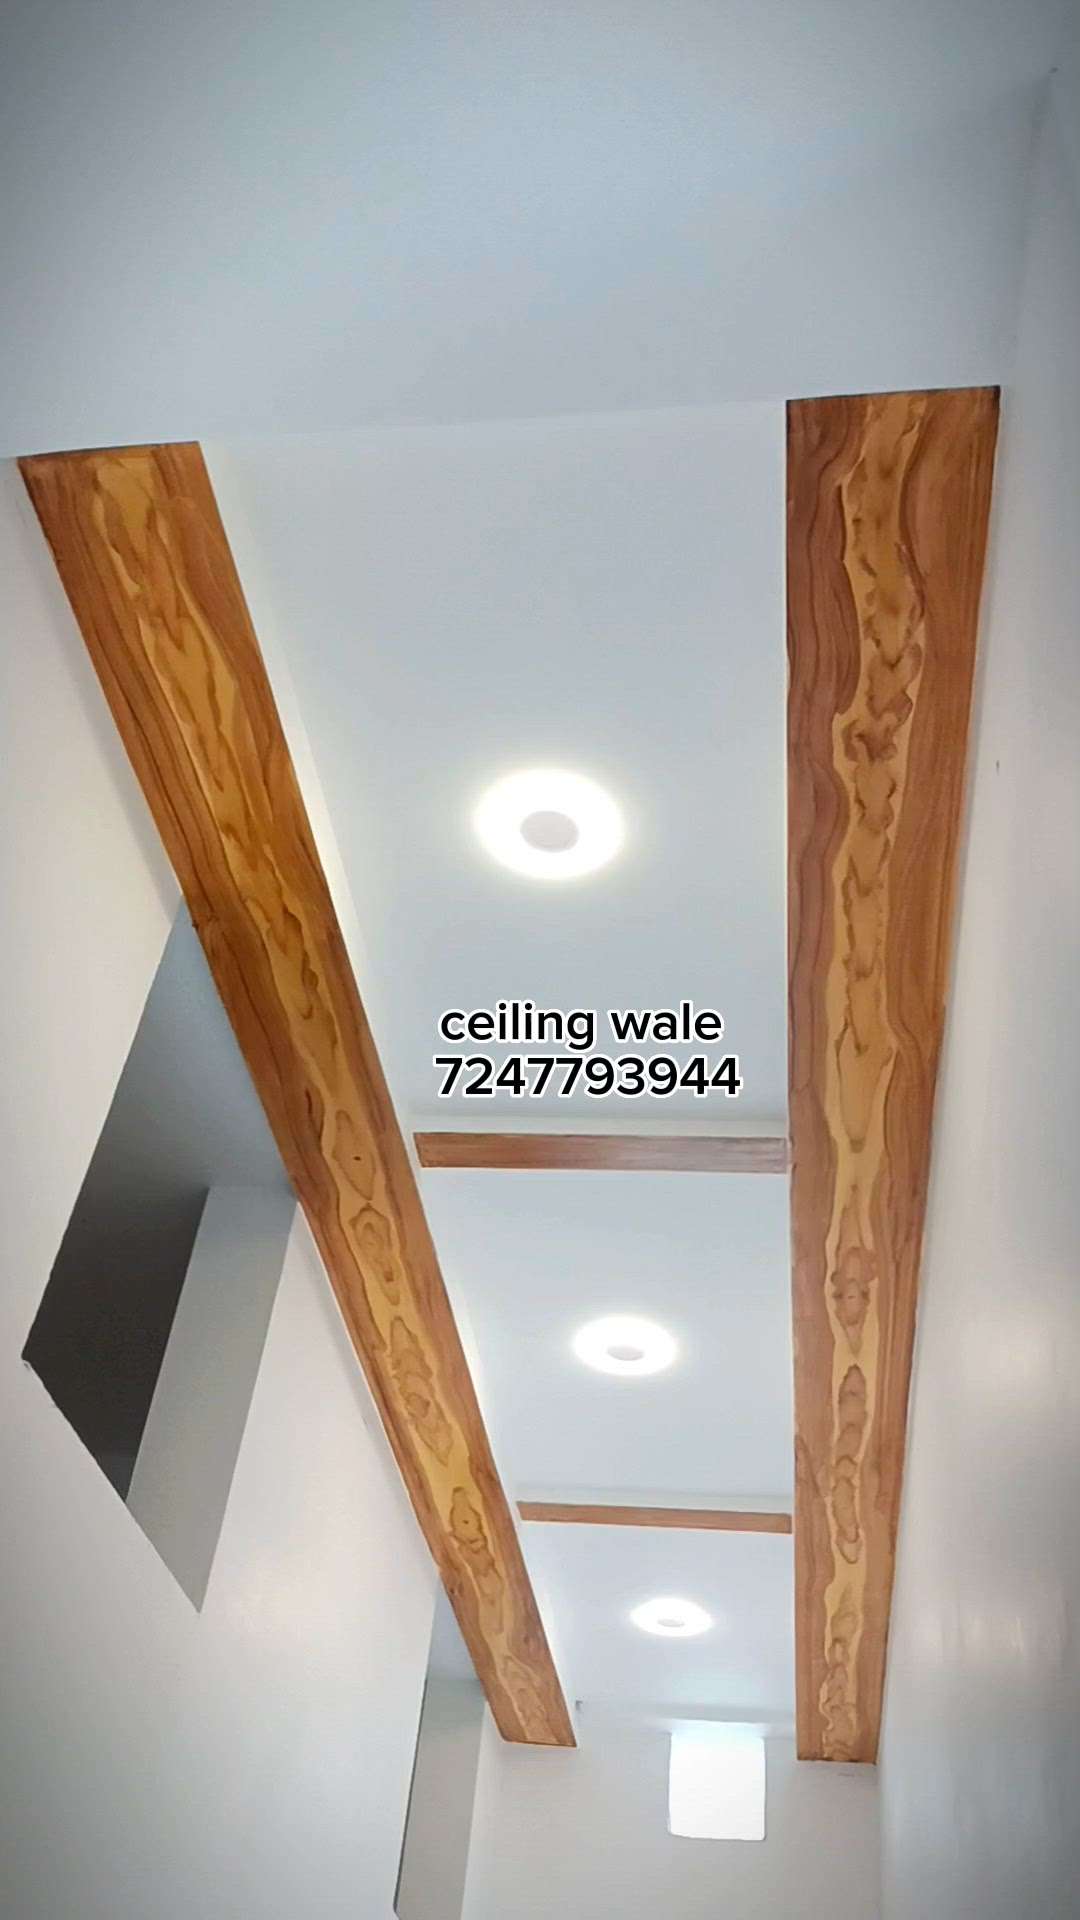 #flashceilling & #pop-seiling 
#virelvideo  best ceiling work.